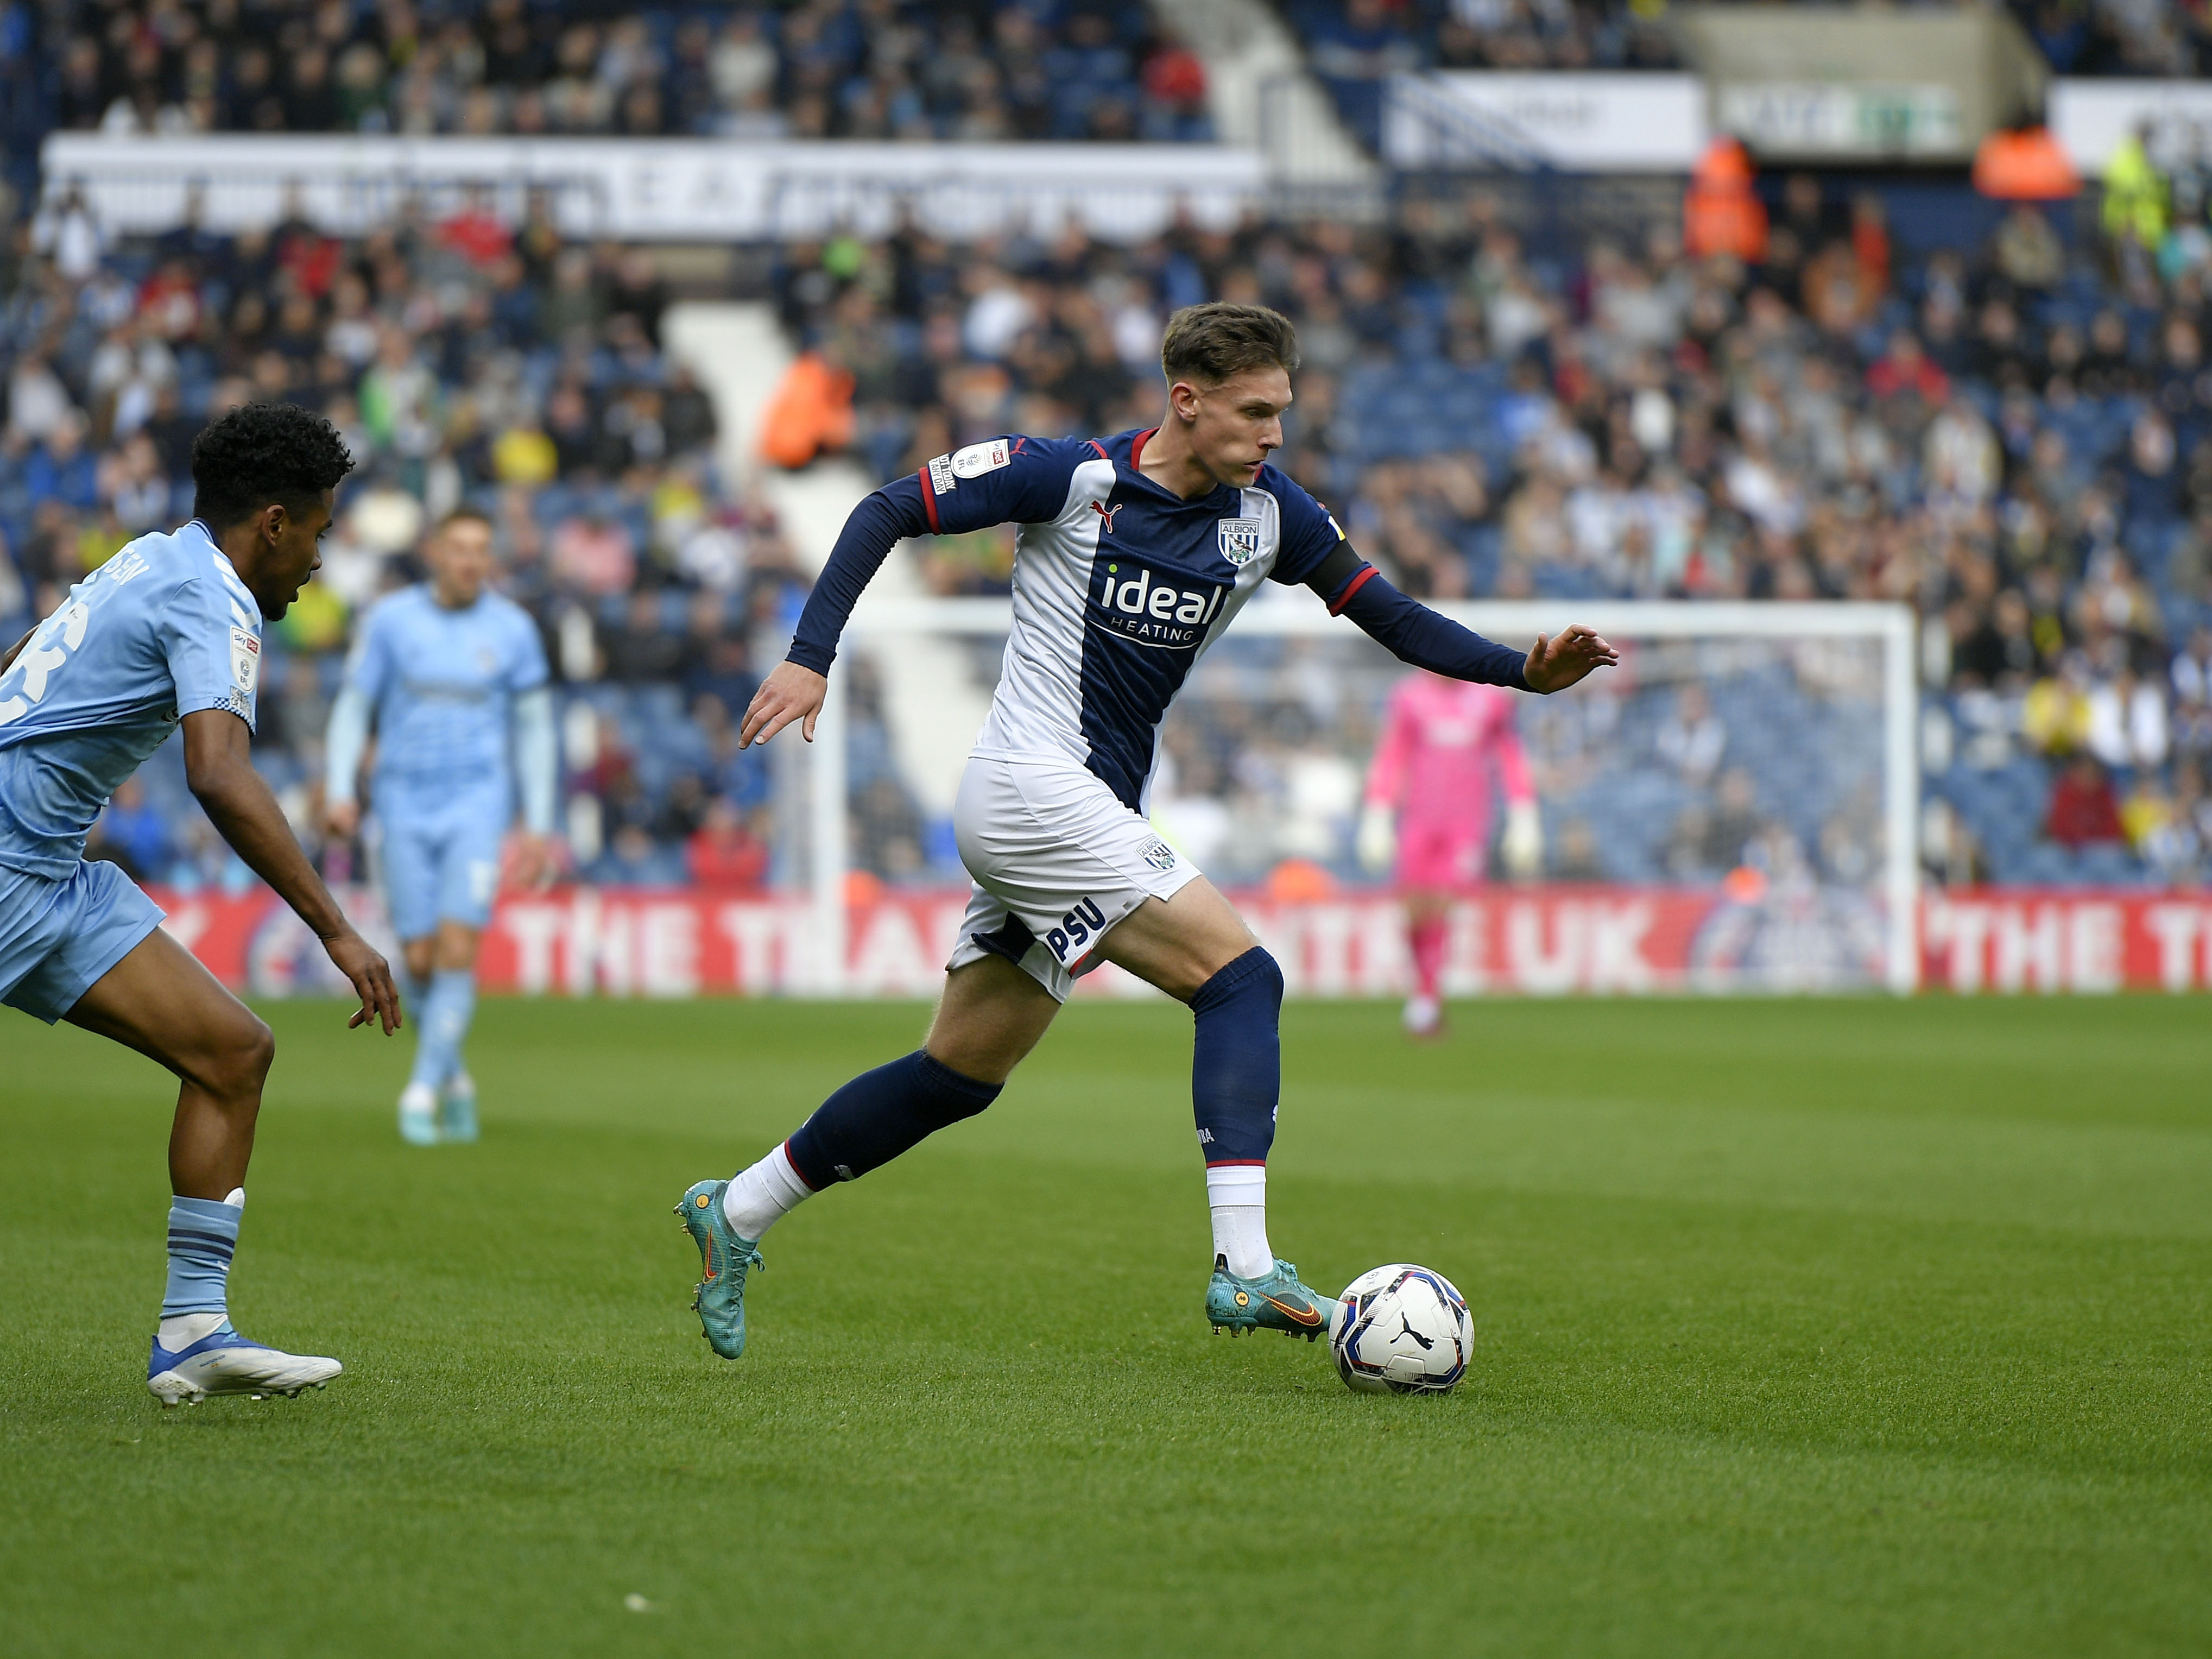 Gardner-Hickman against Coventry